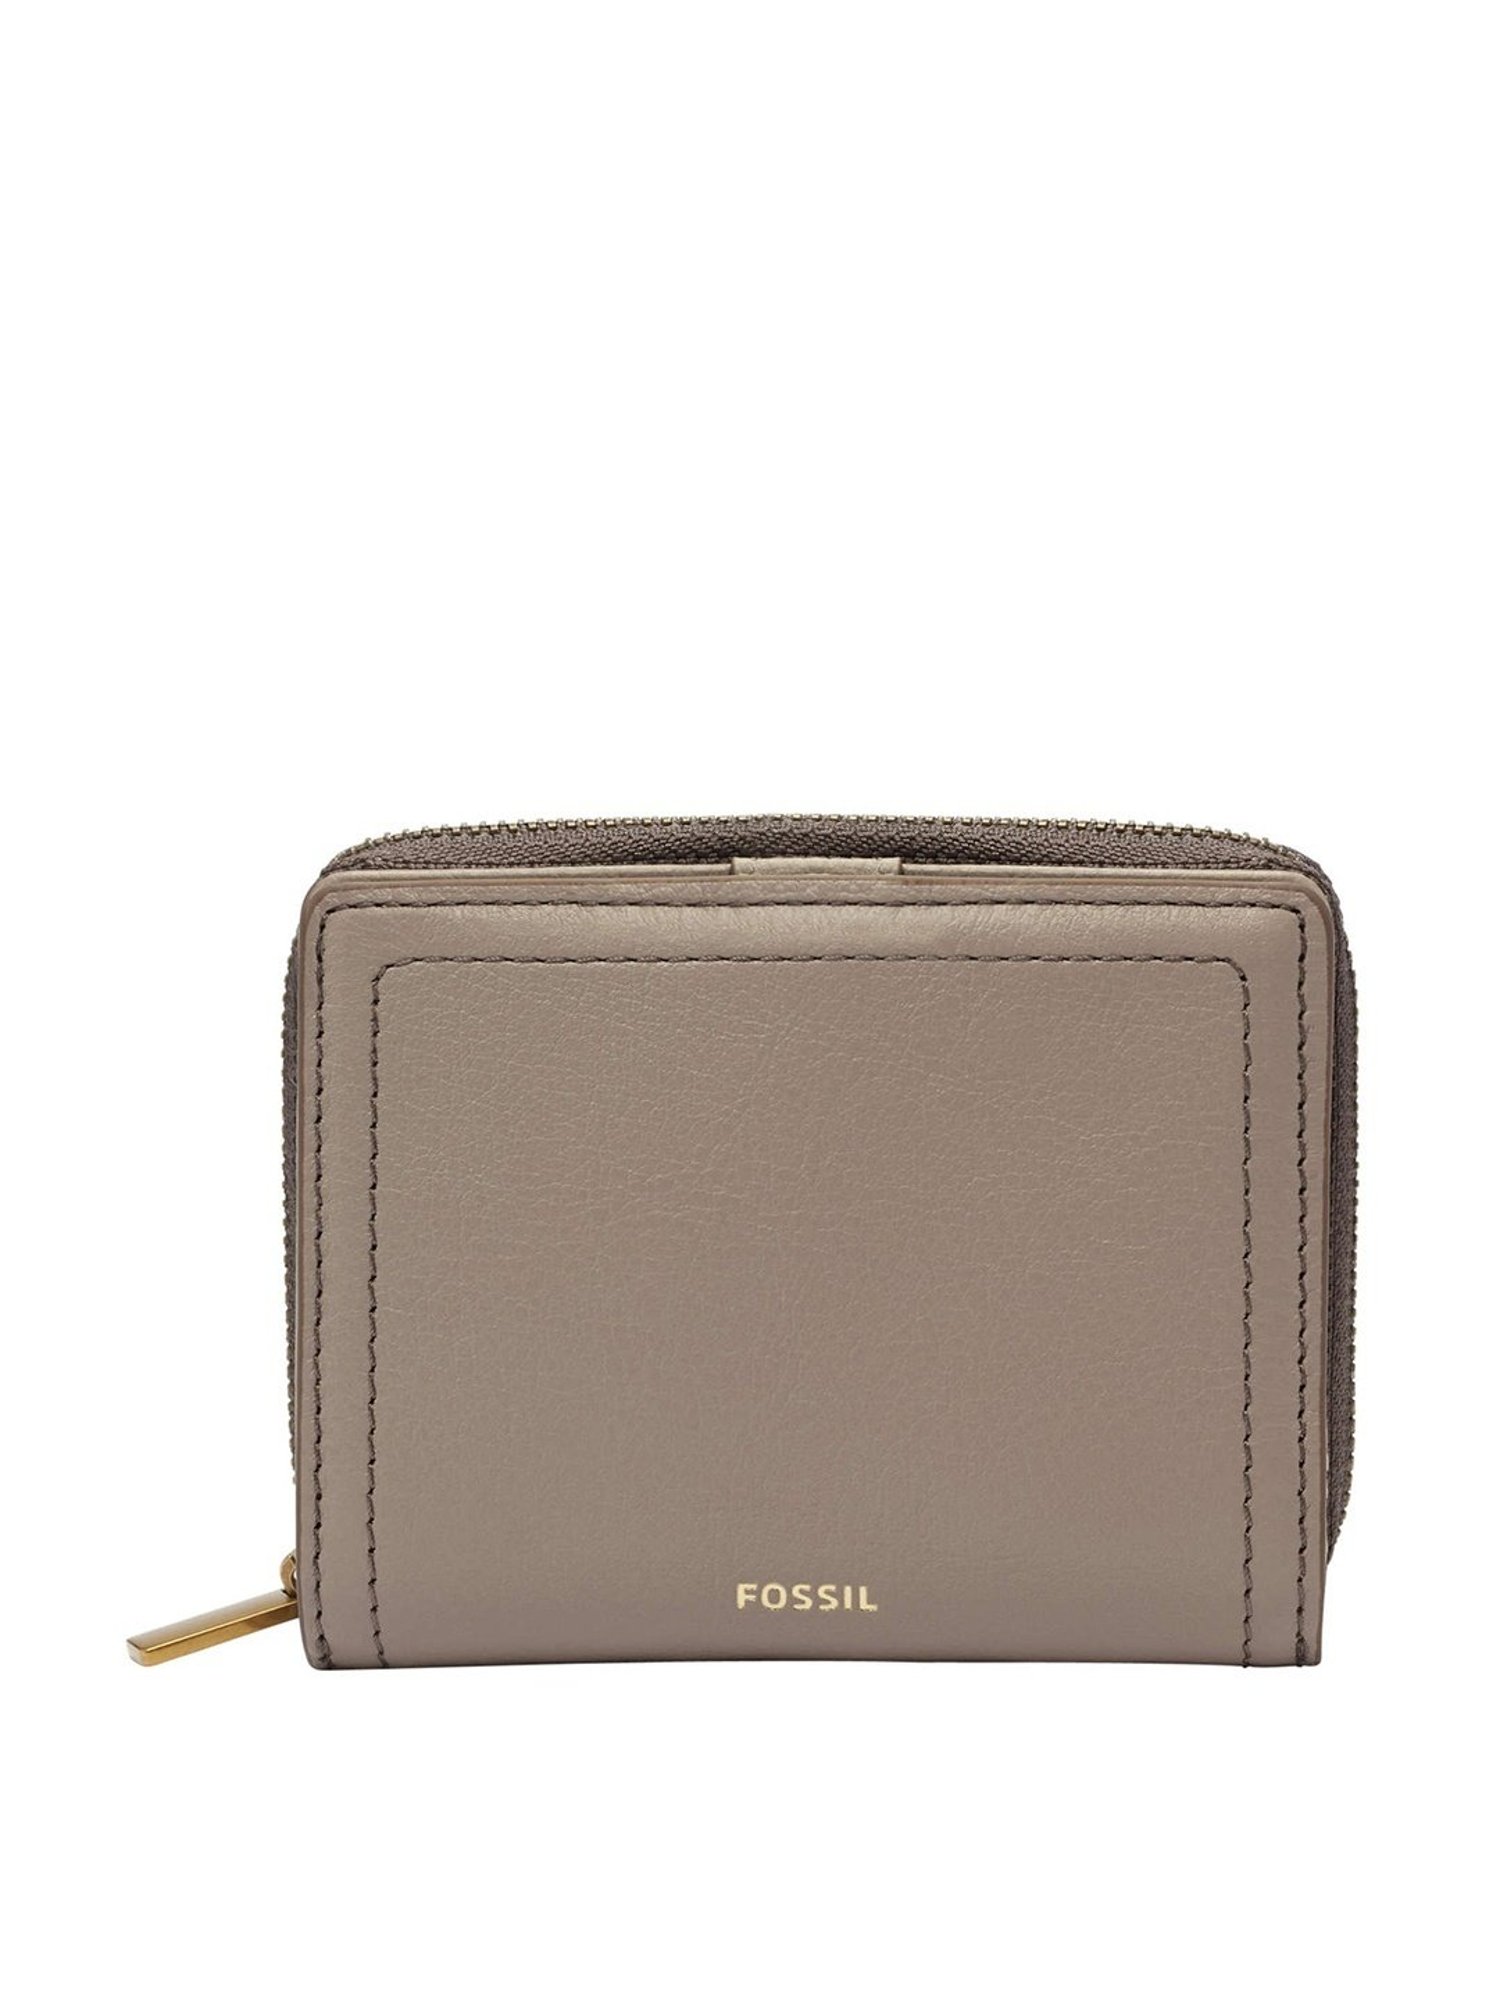 Fossil Leather Shoulder Bag Purse Black Key Style 75082 | eBay